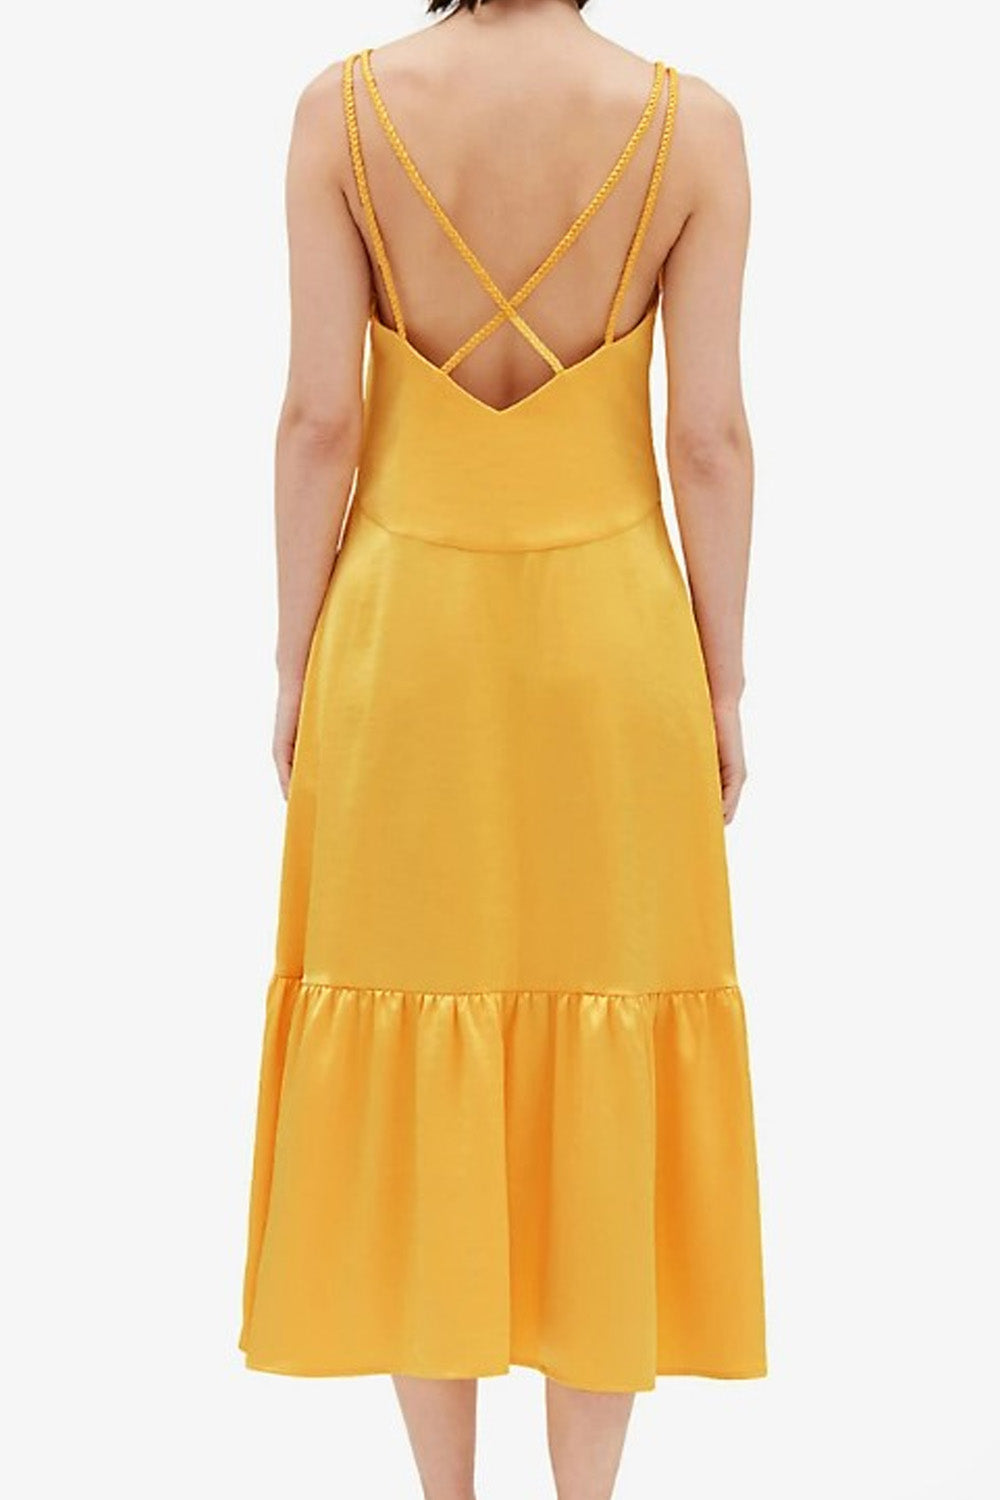 Incandescent yellow Dress